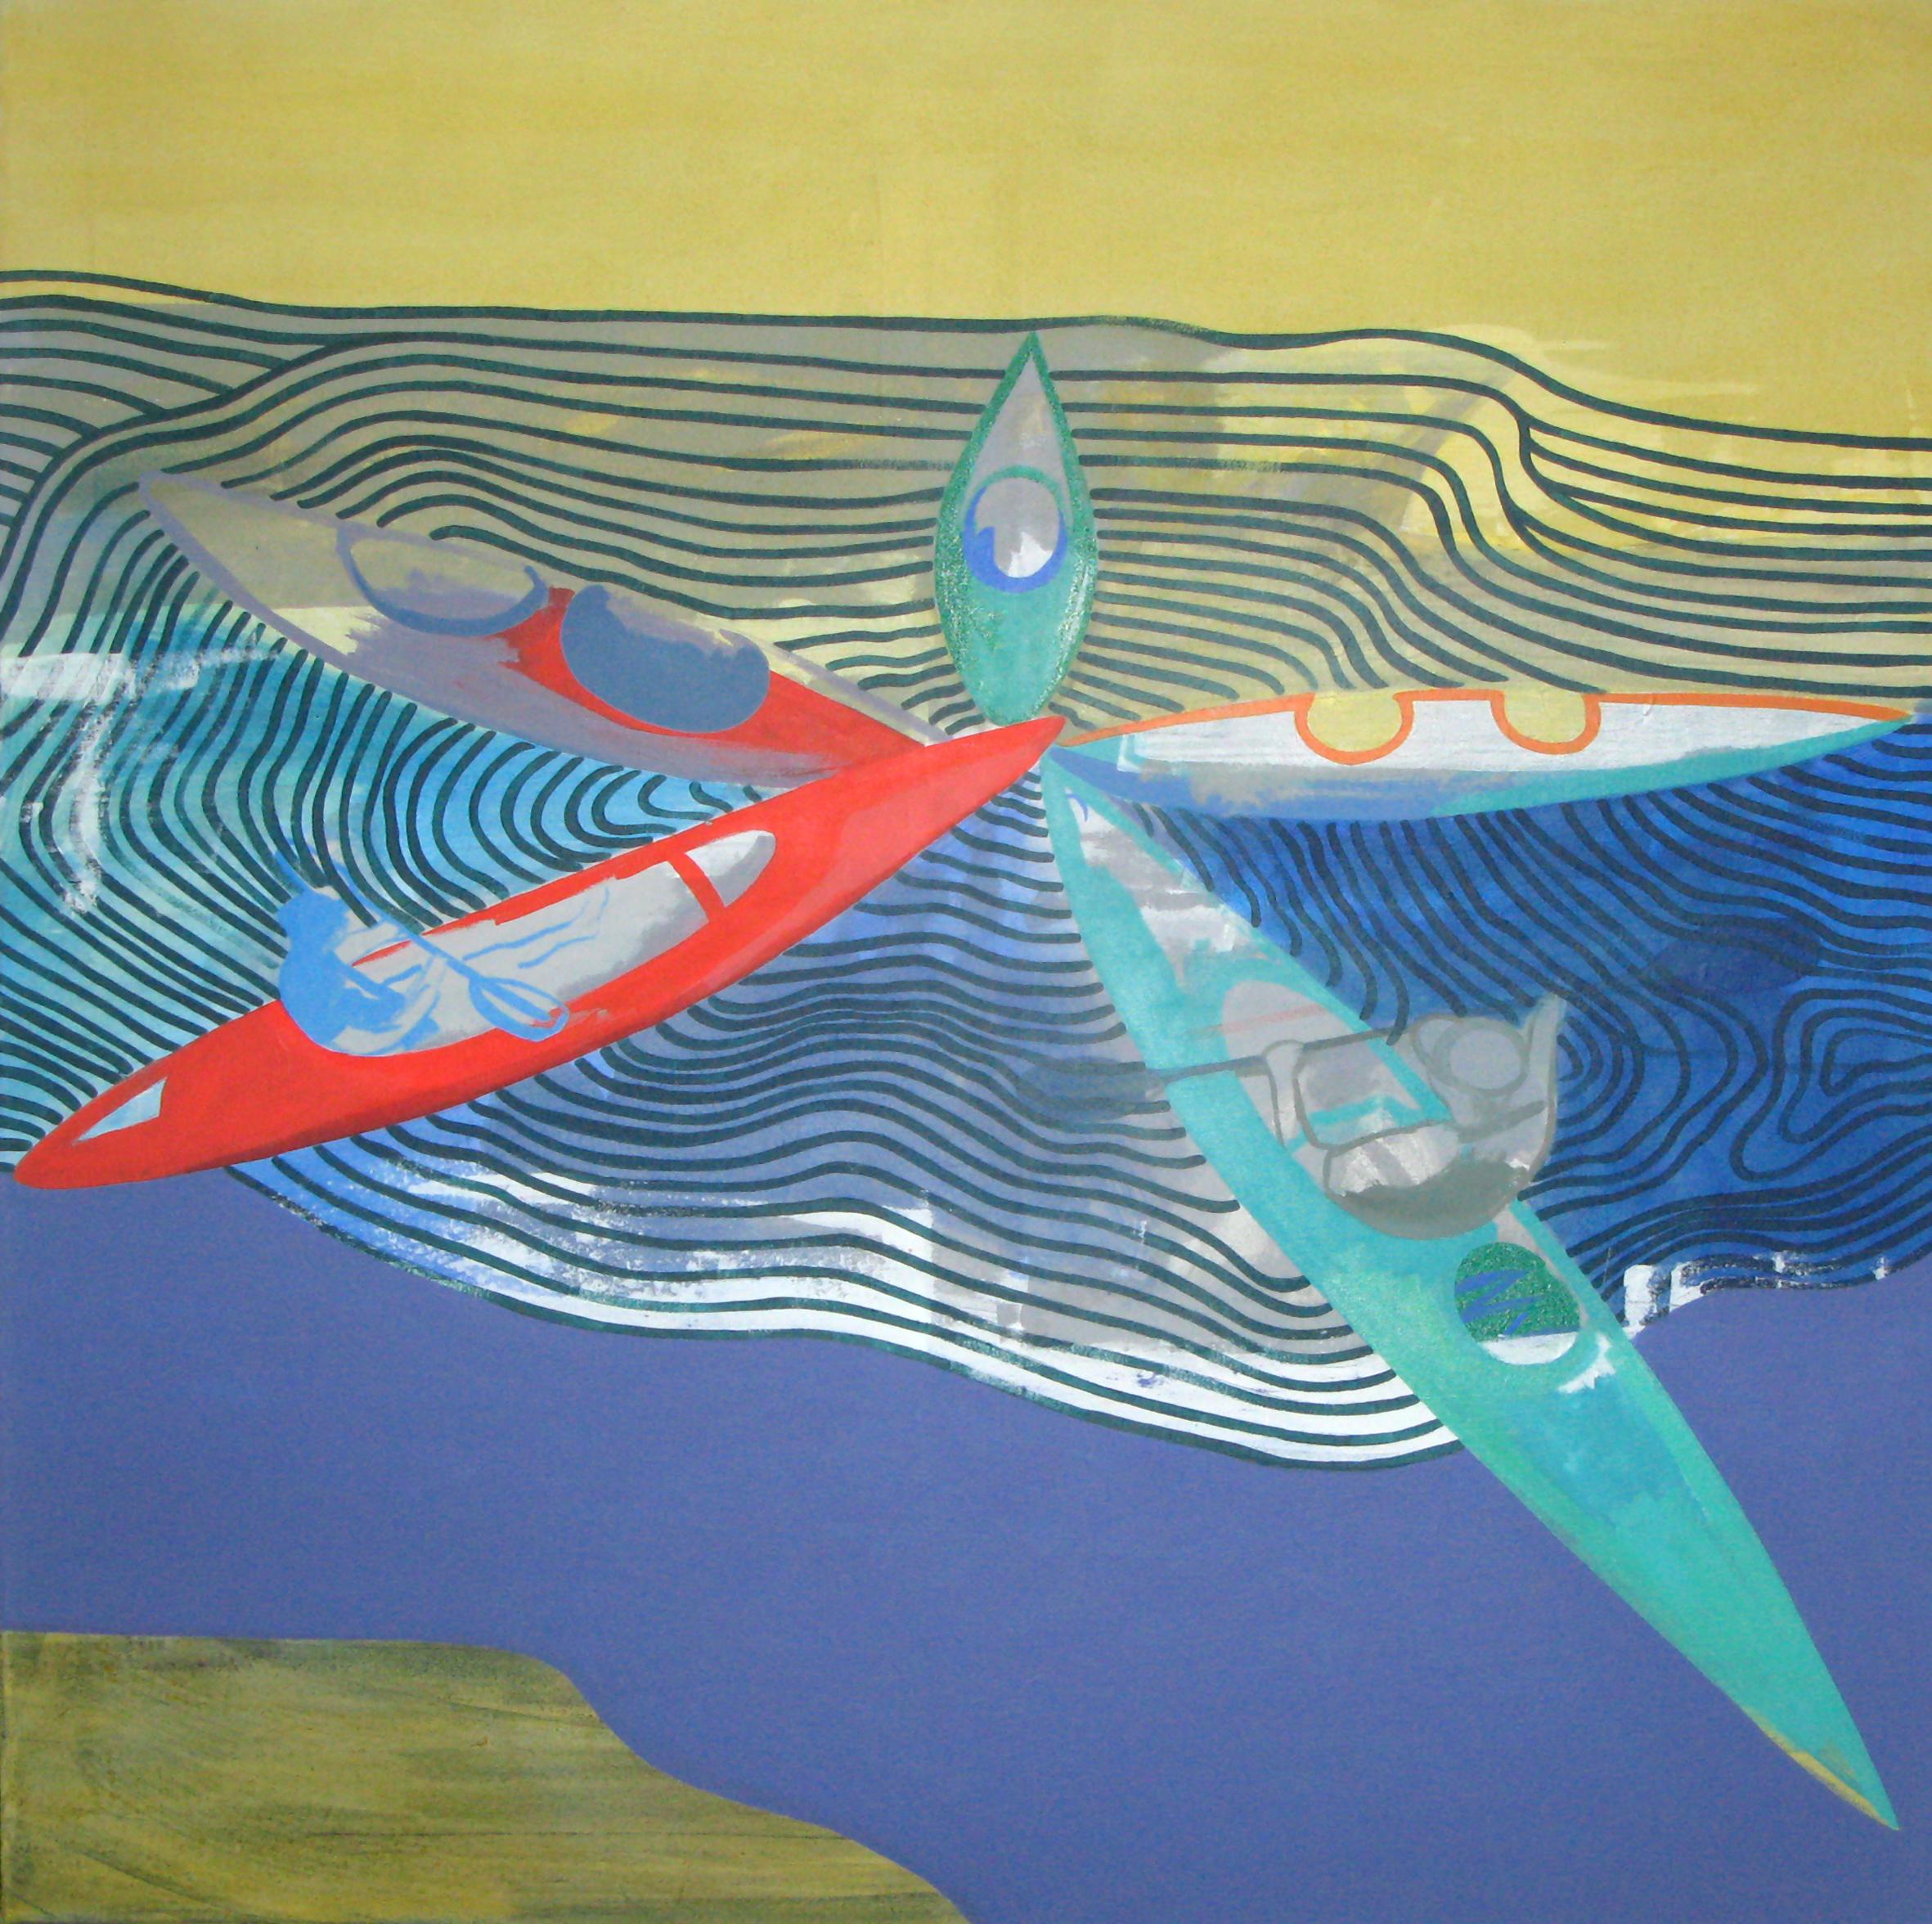 Anna Ładecka Figurative Painting - Lake with Kayaks - Modern Landscape Painting, Abstract, Lake View, Joyful, Water